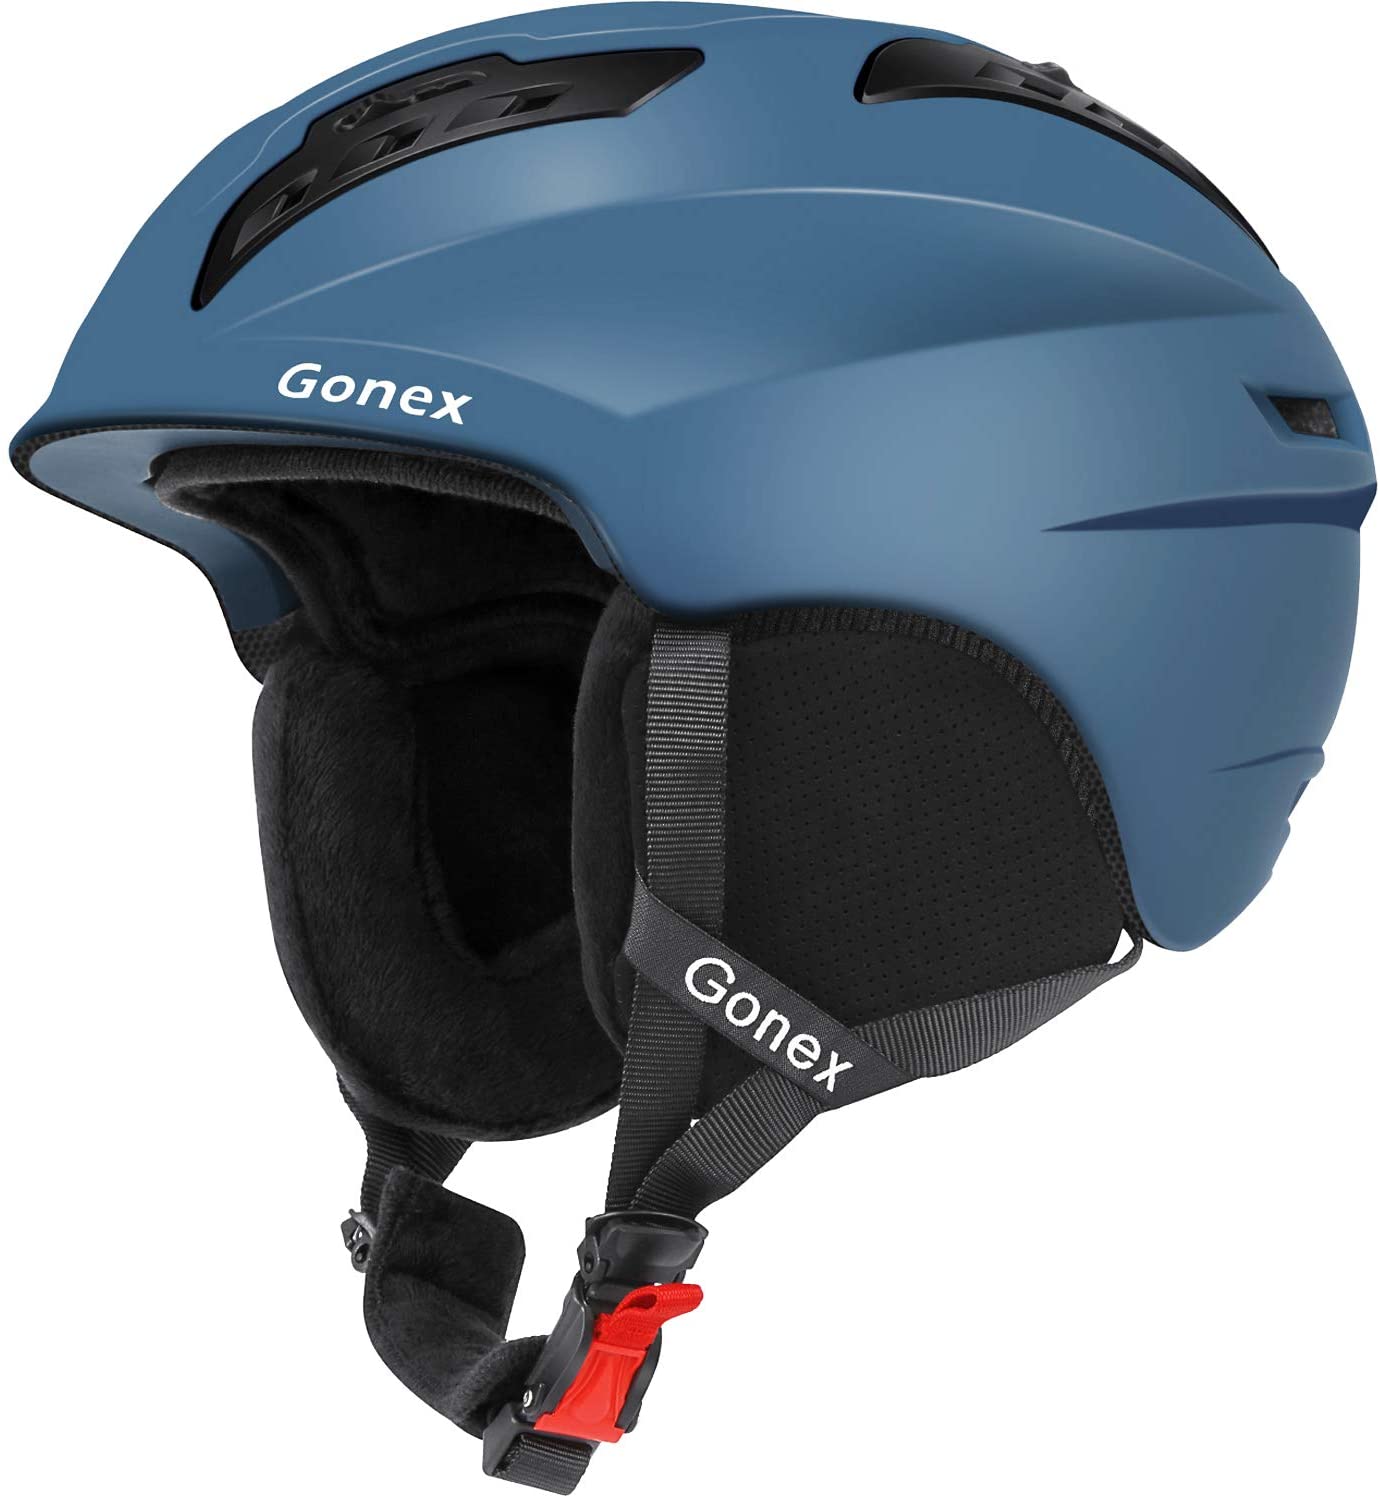 Gonex Ski Helmet, Winter Snow Snowboard Skiing Helmet with Safety Certificate